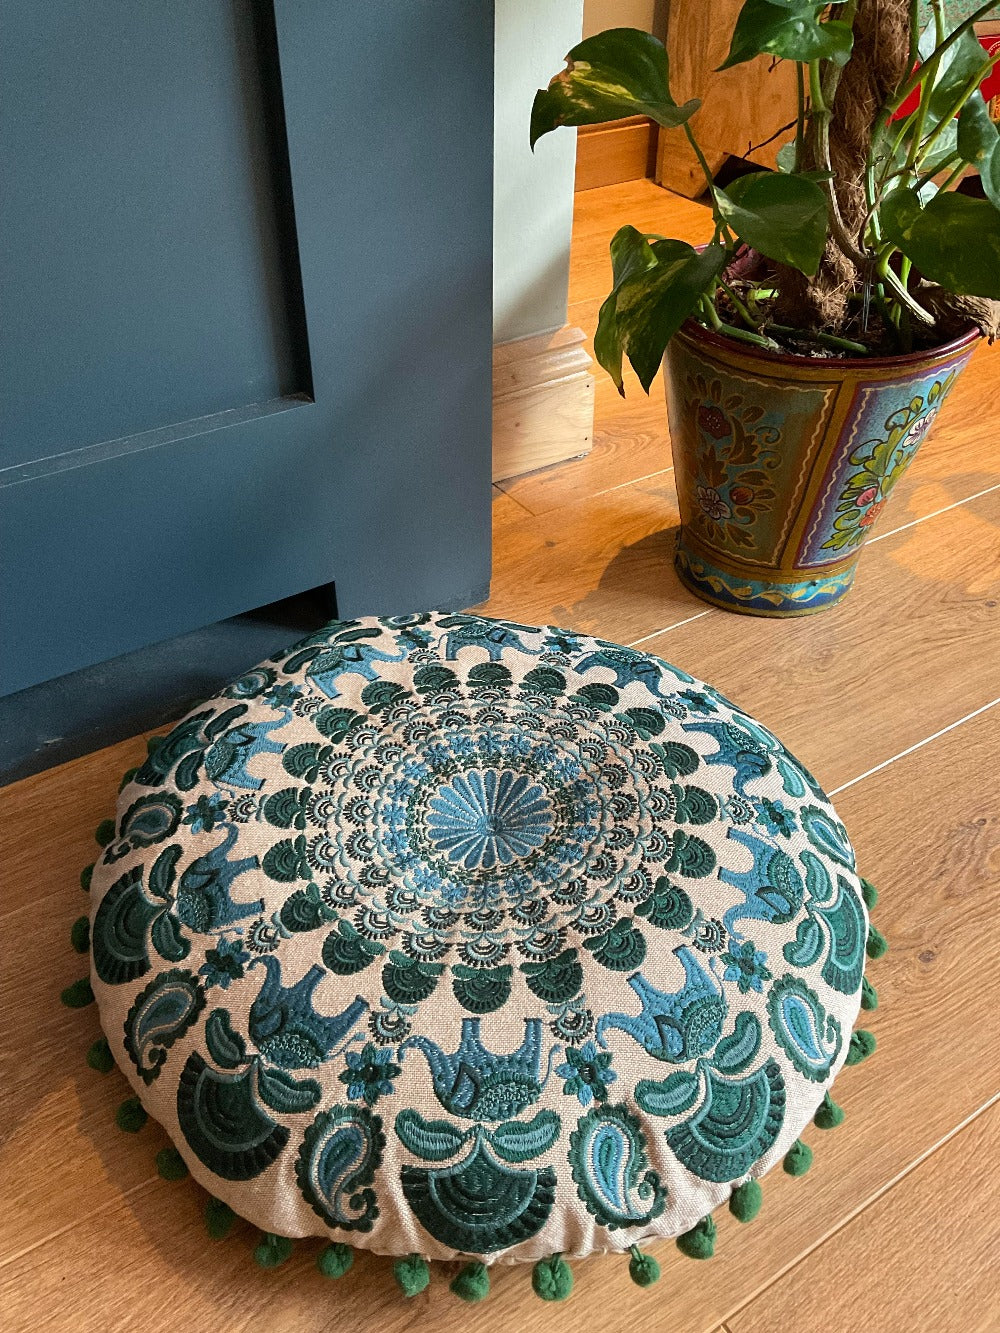 Mandala Yoga Round Cushion With Pom Pom and Elephant Design